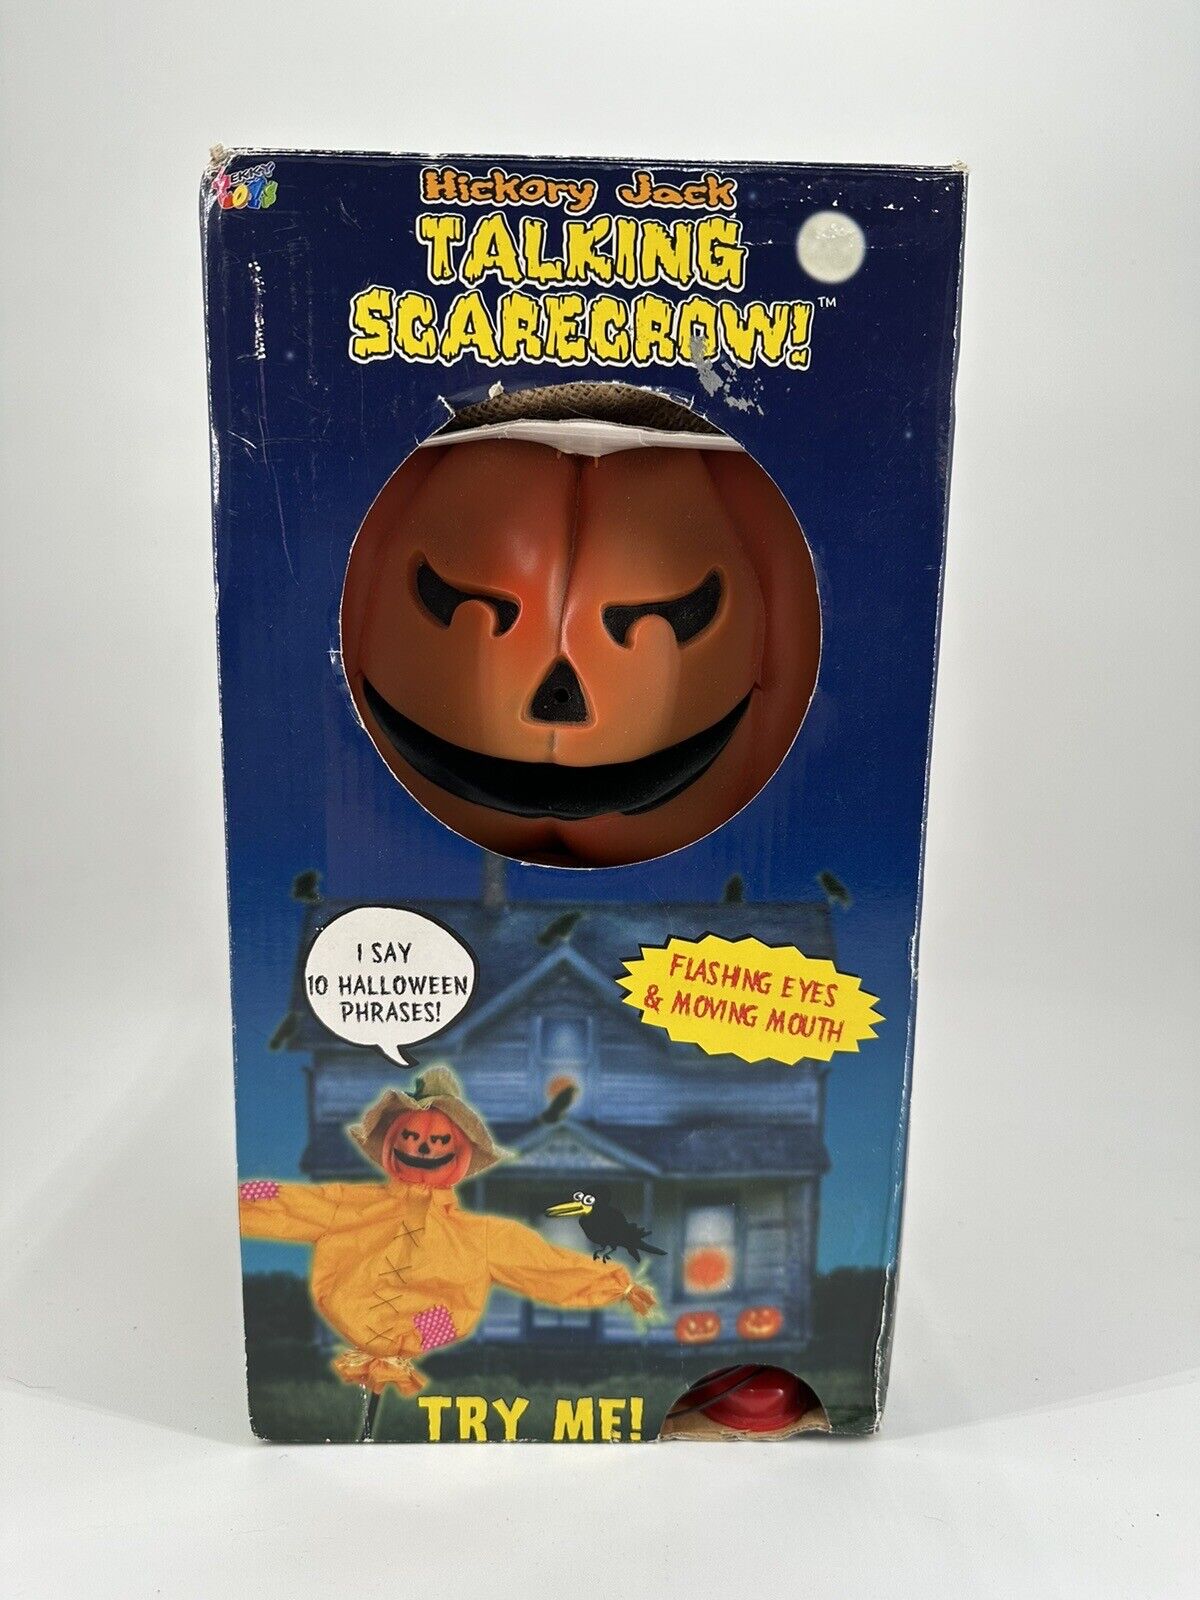 NIB 2008 Tekky Toys Halloween Animated Hickory Jack Talking Scarecrow 4’ Tall